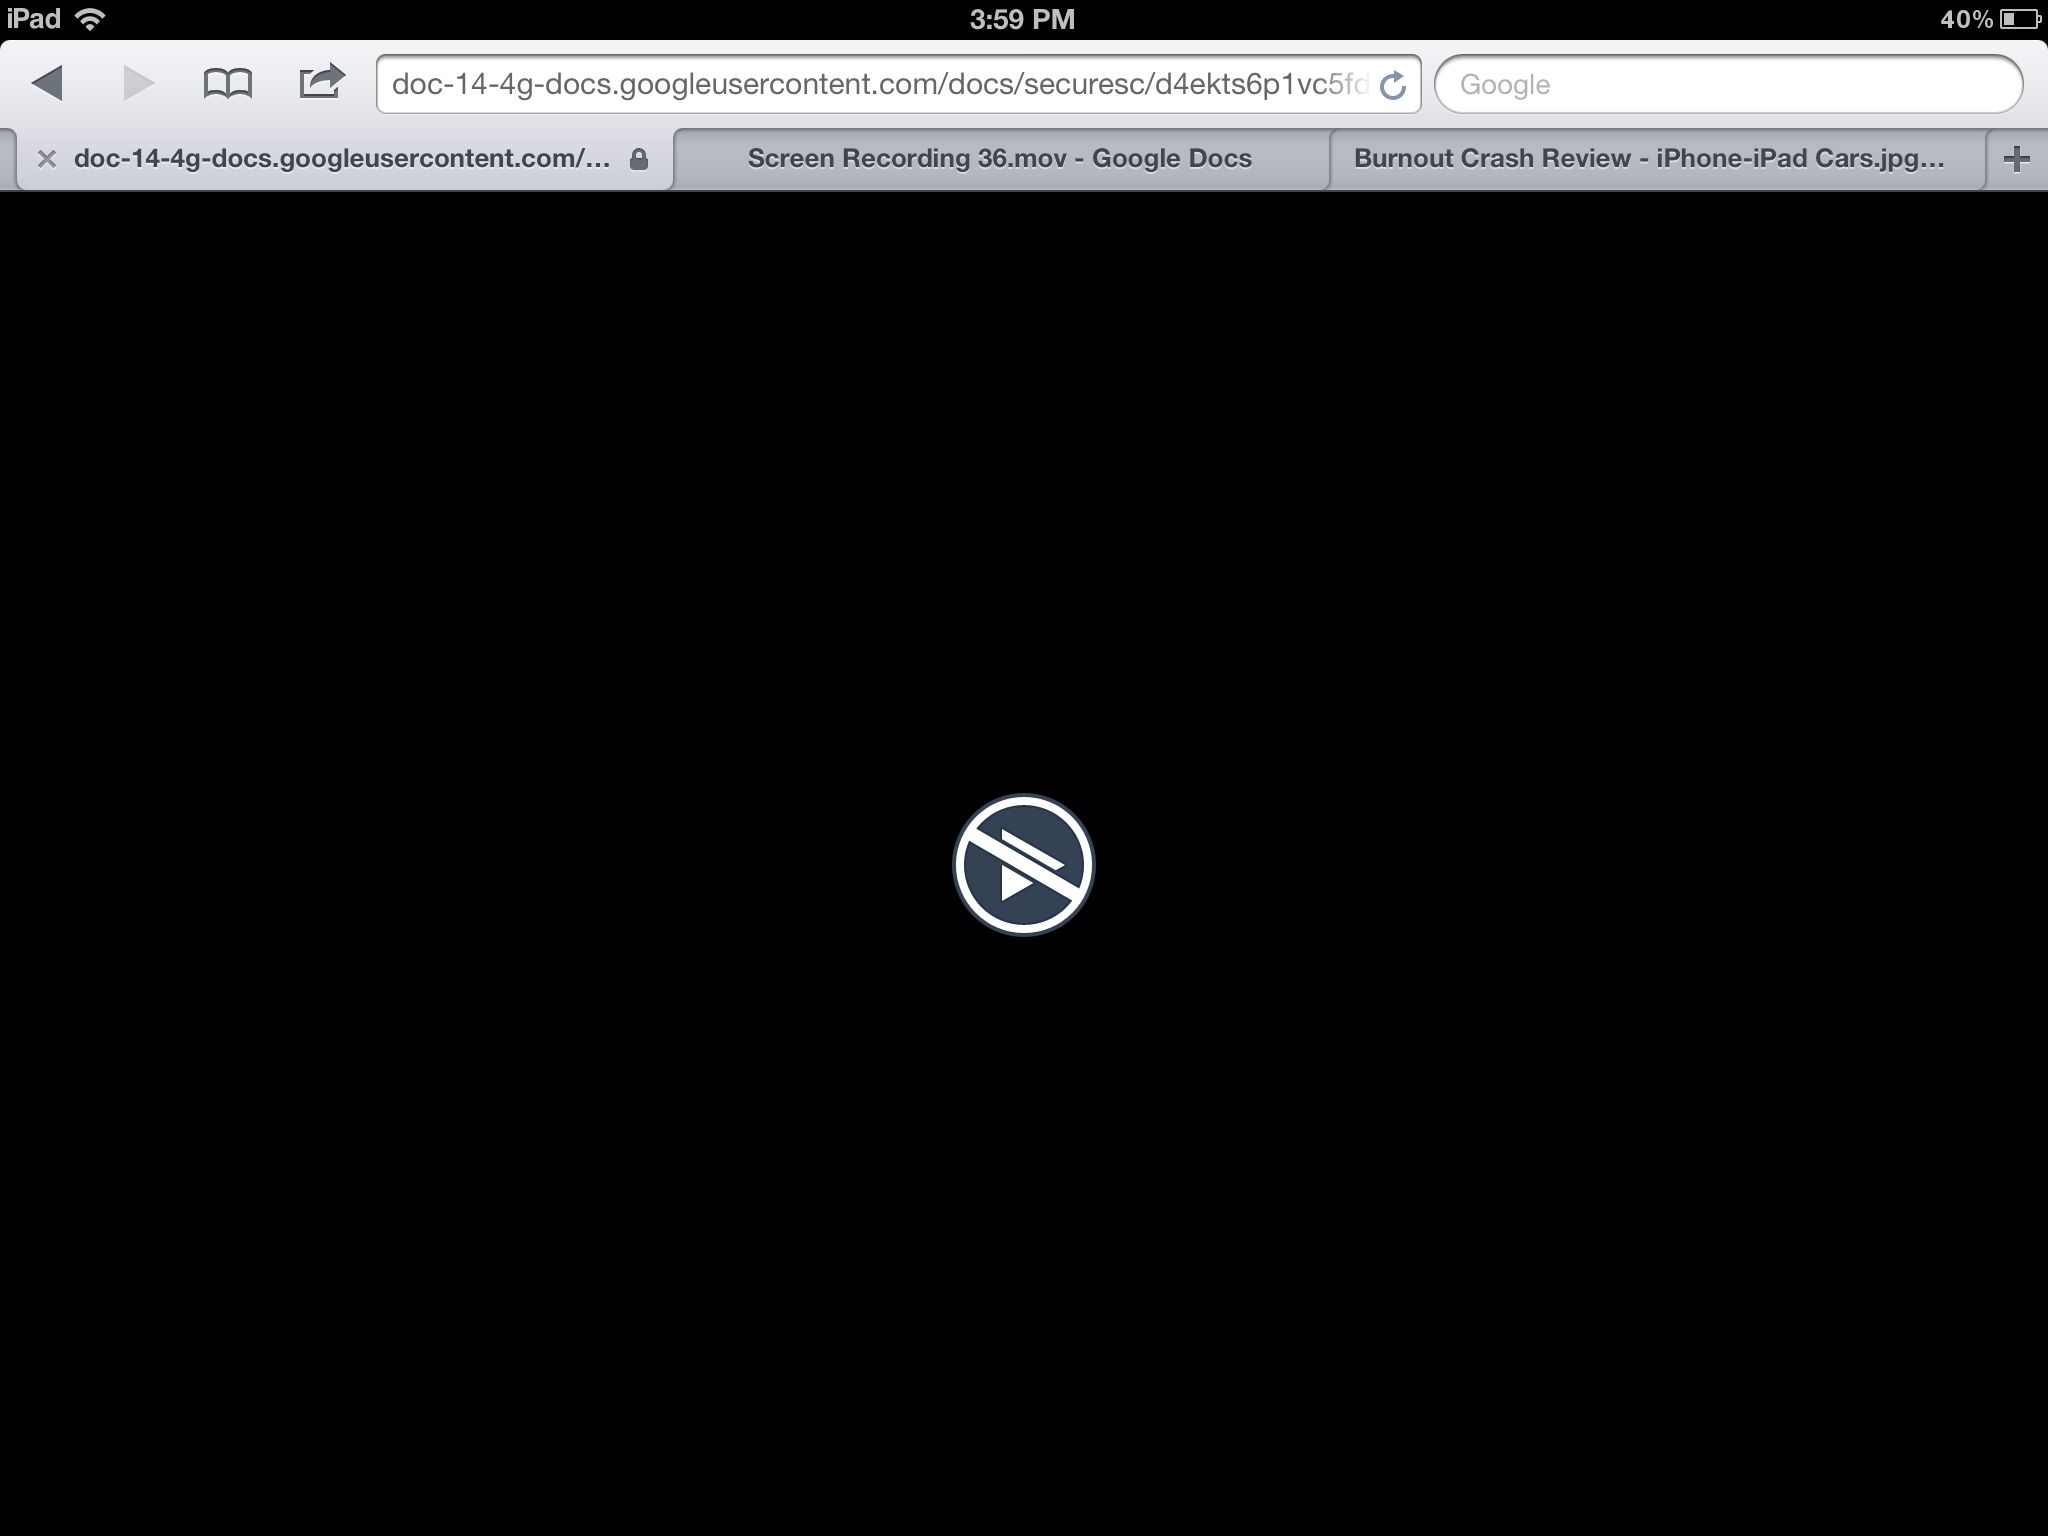 Google Drive iPhone iPad - video fail